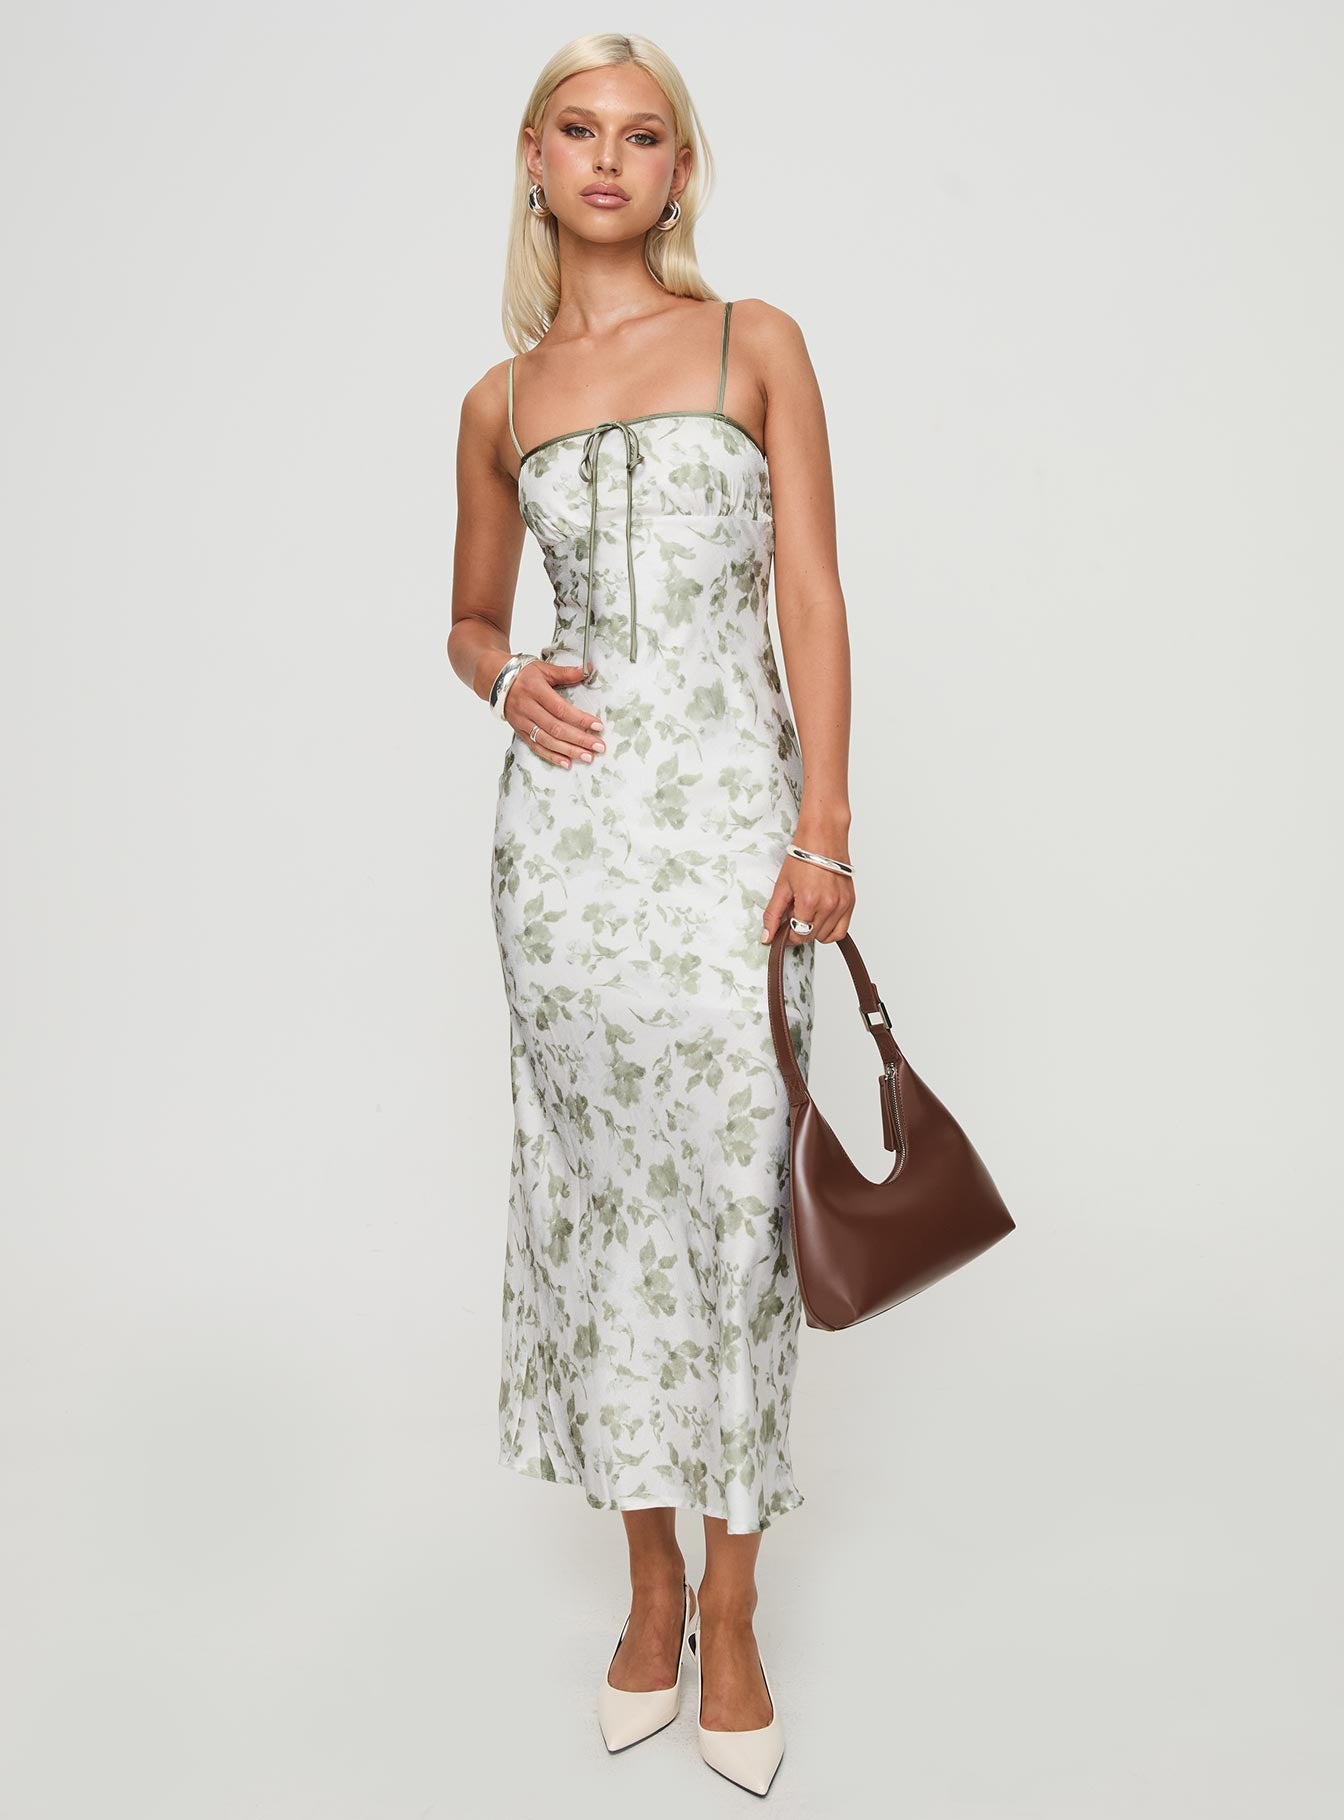 Shop Formal Dress - Vasiliki Maxi Dress White / Green Floral fifth image